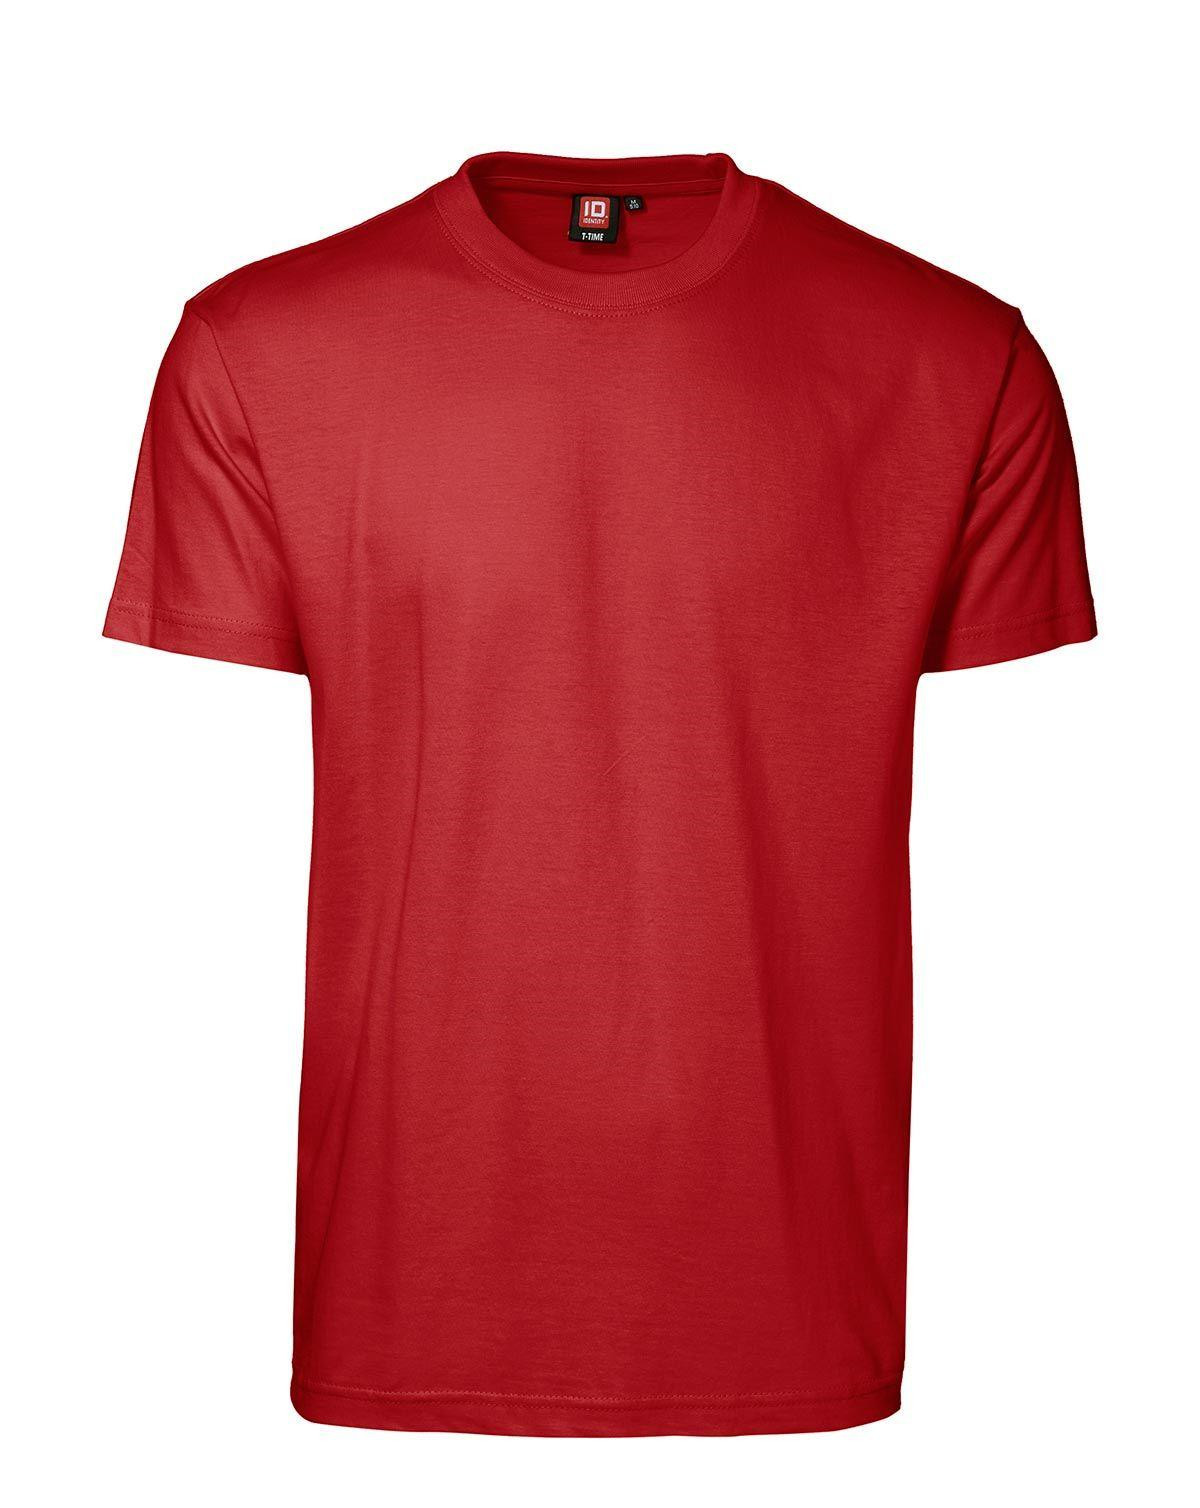 Billede af ID T-Time T-shirt, rund hals (Rød, XL) hos Army Star